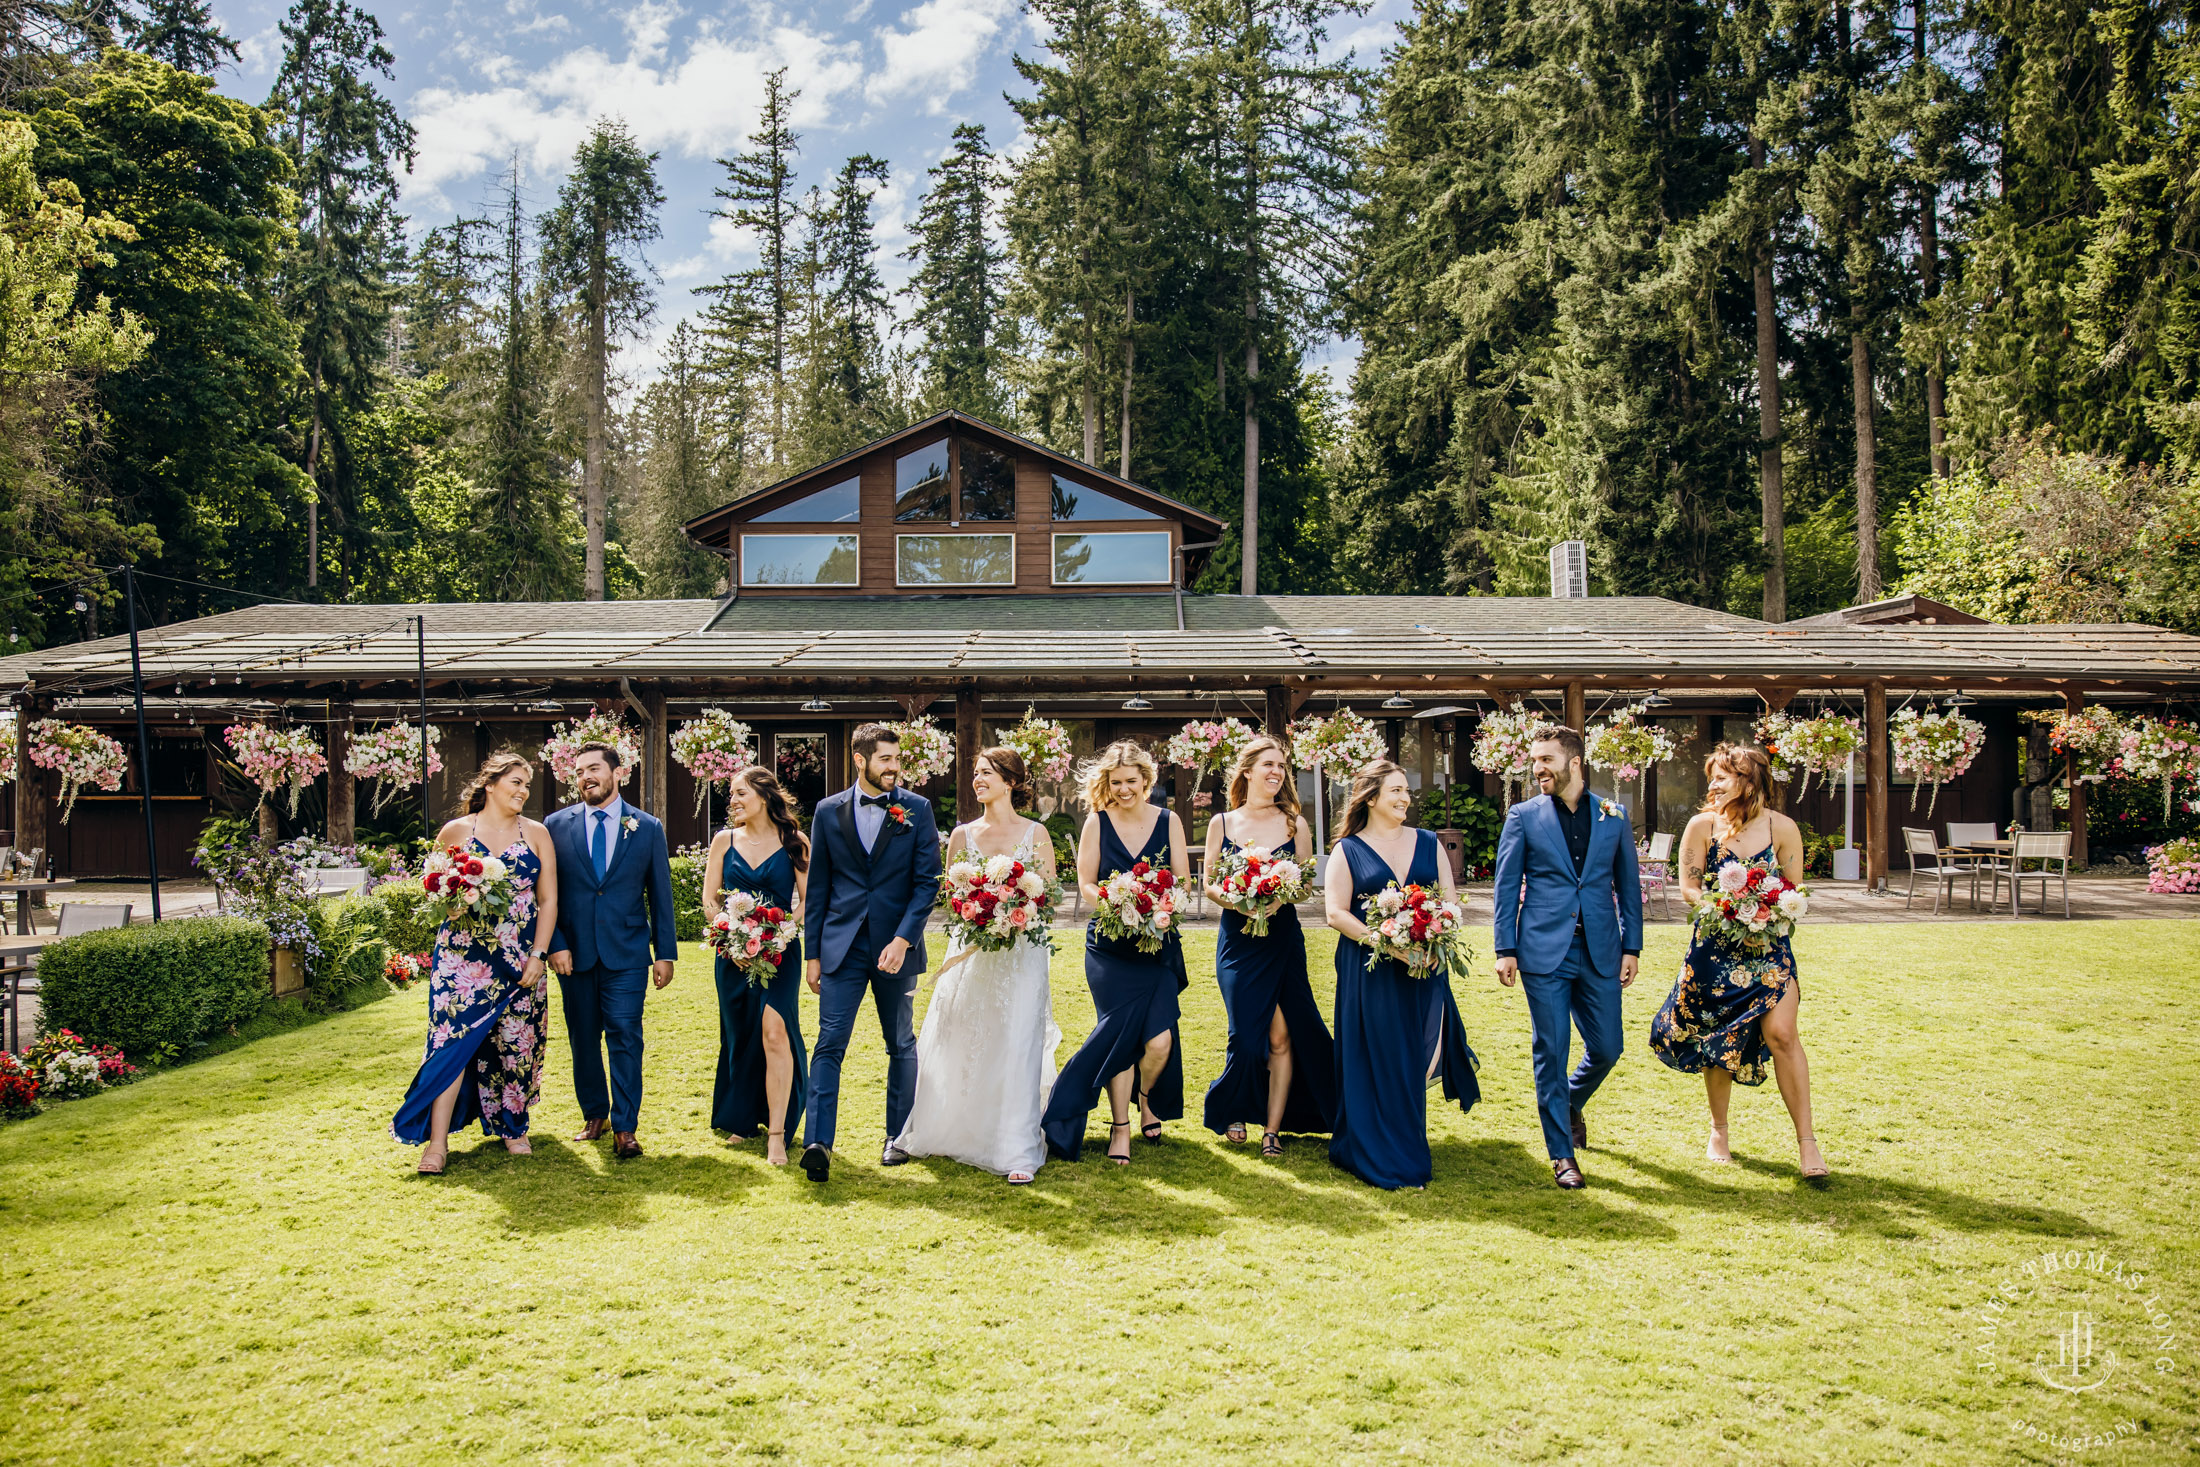 Kiana Lodge Poulsbo WA wedding by Seattle wedding photographer James Thomas Long Photography